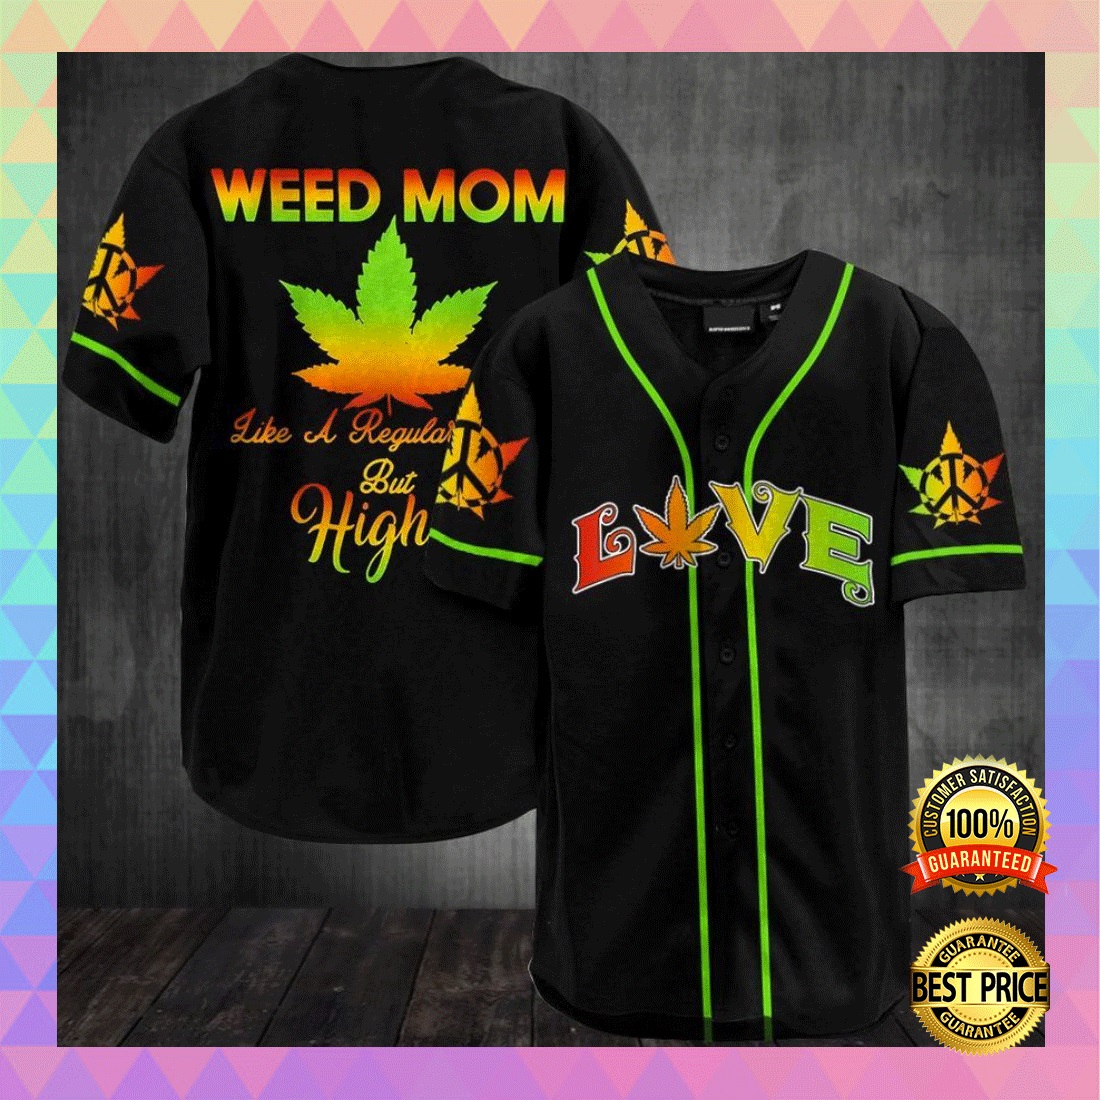 Weed mom like a regular mom but higher baseball jersey44